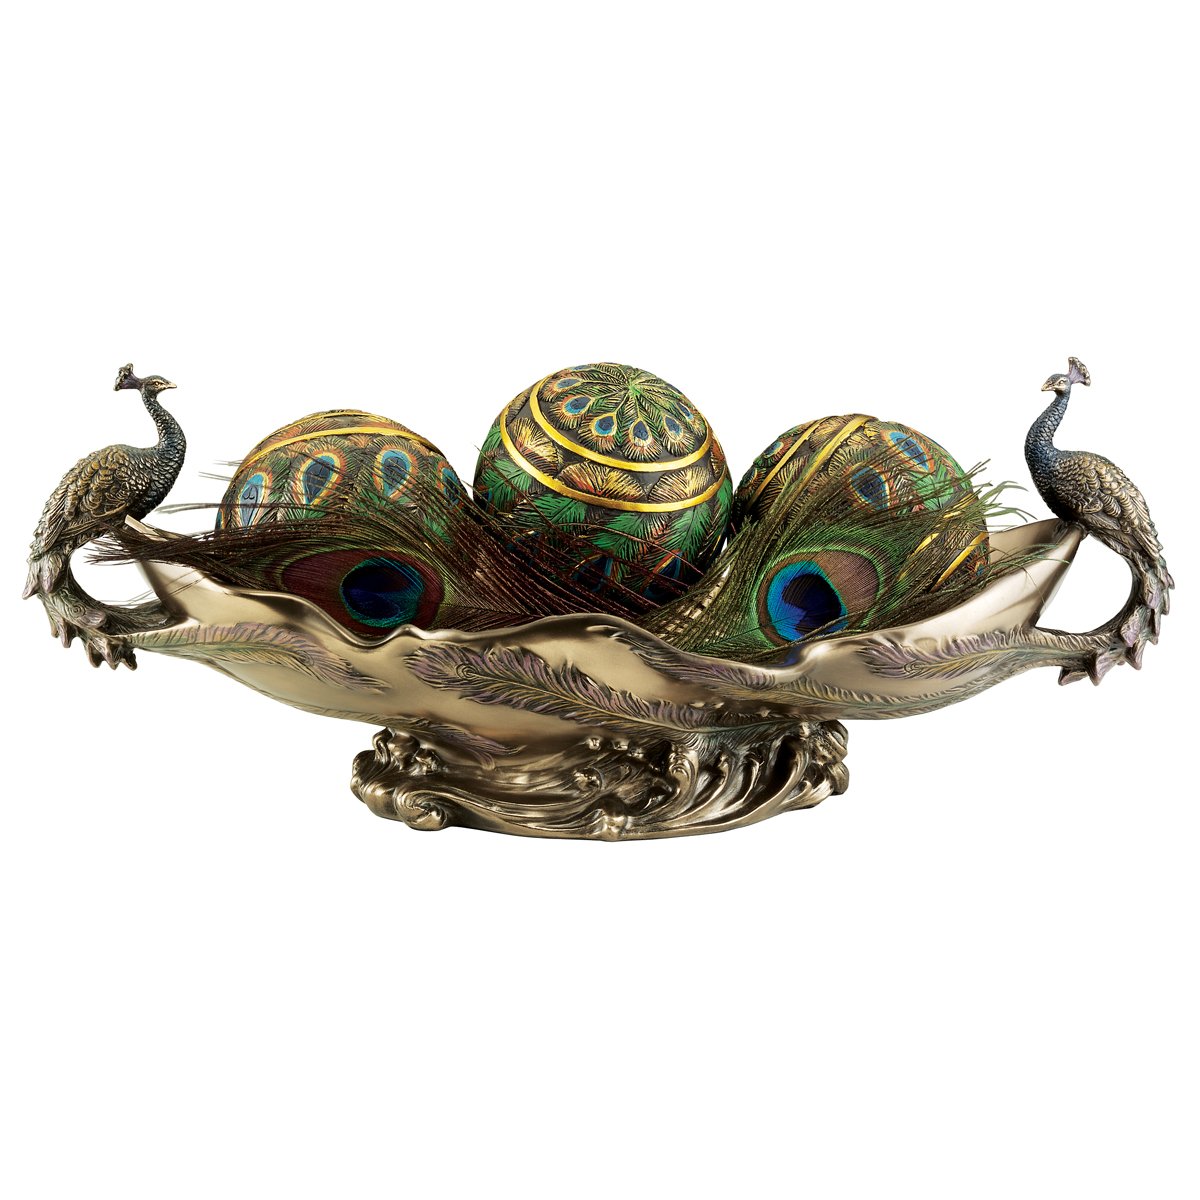 Design Toscano WU10476 Peacock's Decorative Centerpiece Sculptural Bowl, 17 Inch, Polyresin, Bronze Finish